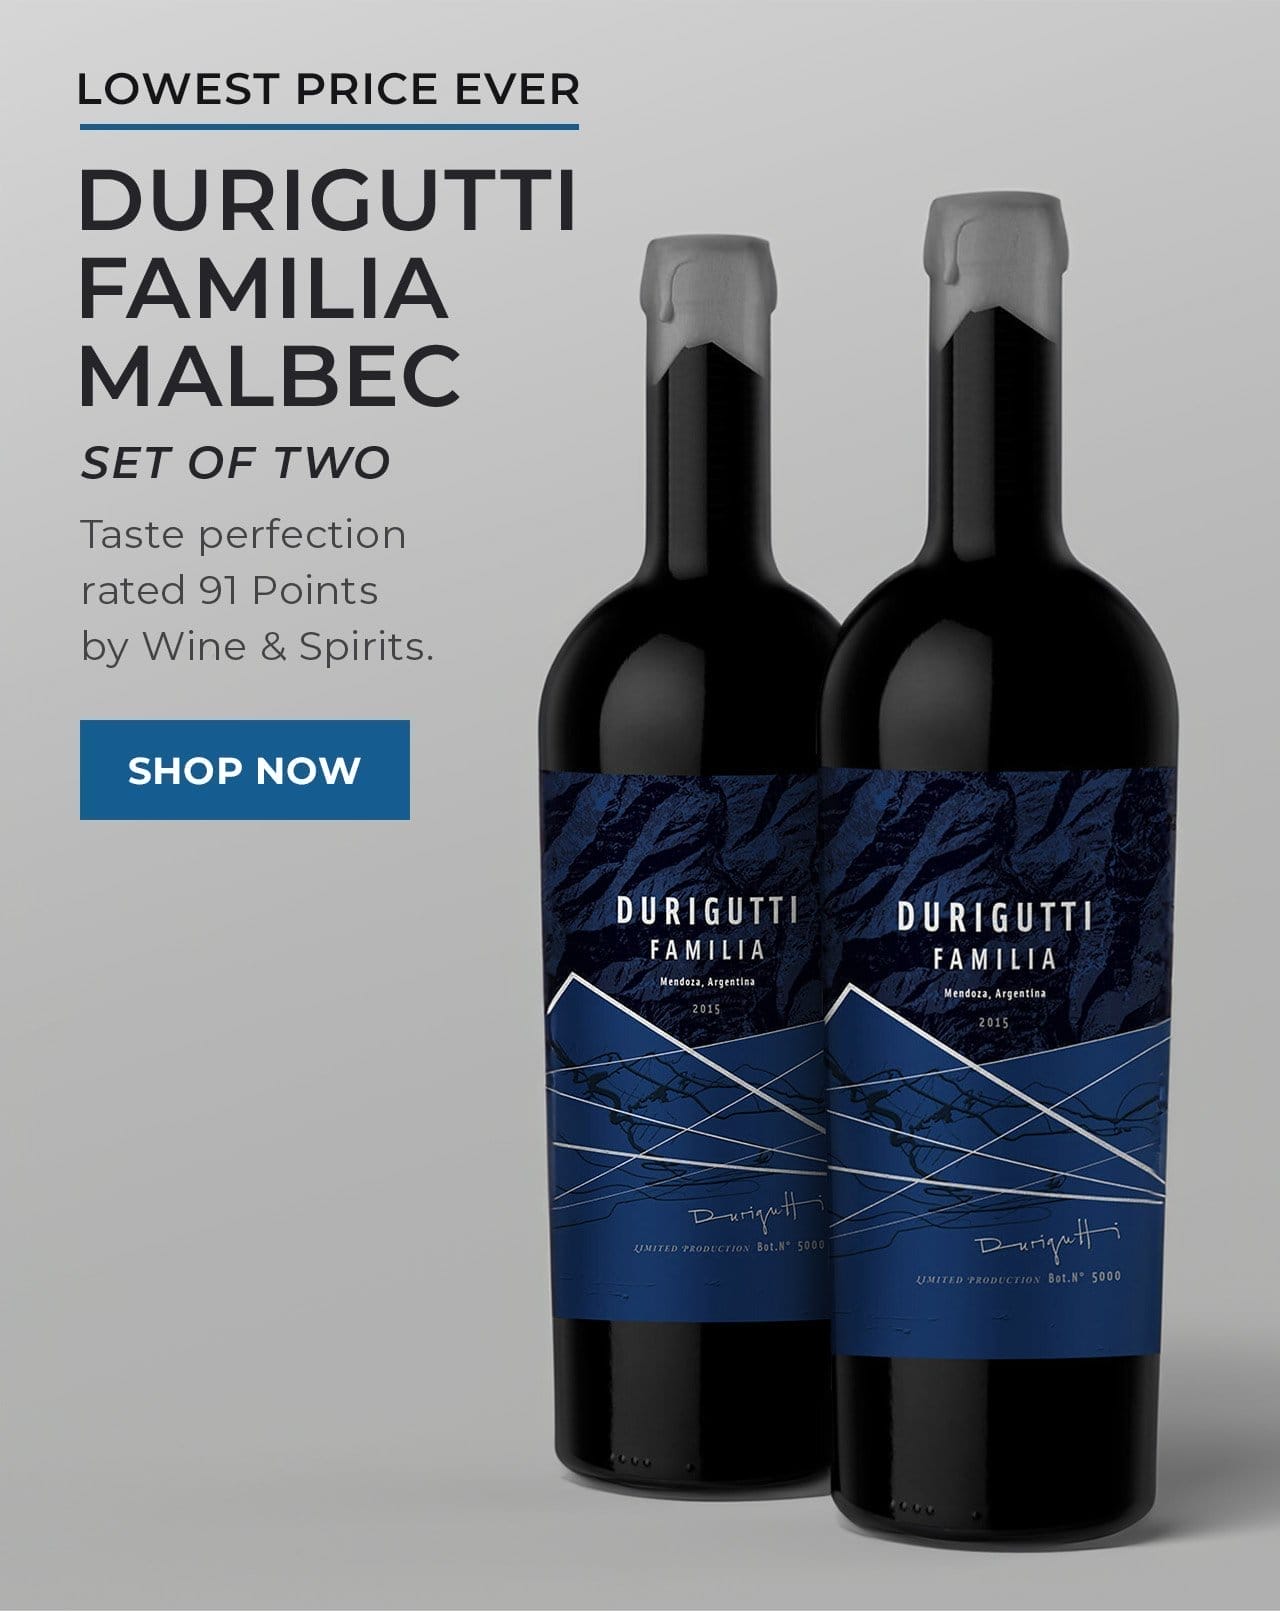 Durigutti Familia Malbec | SHOP NOW